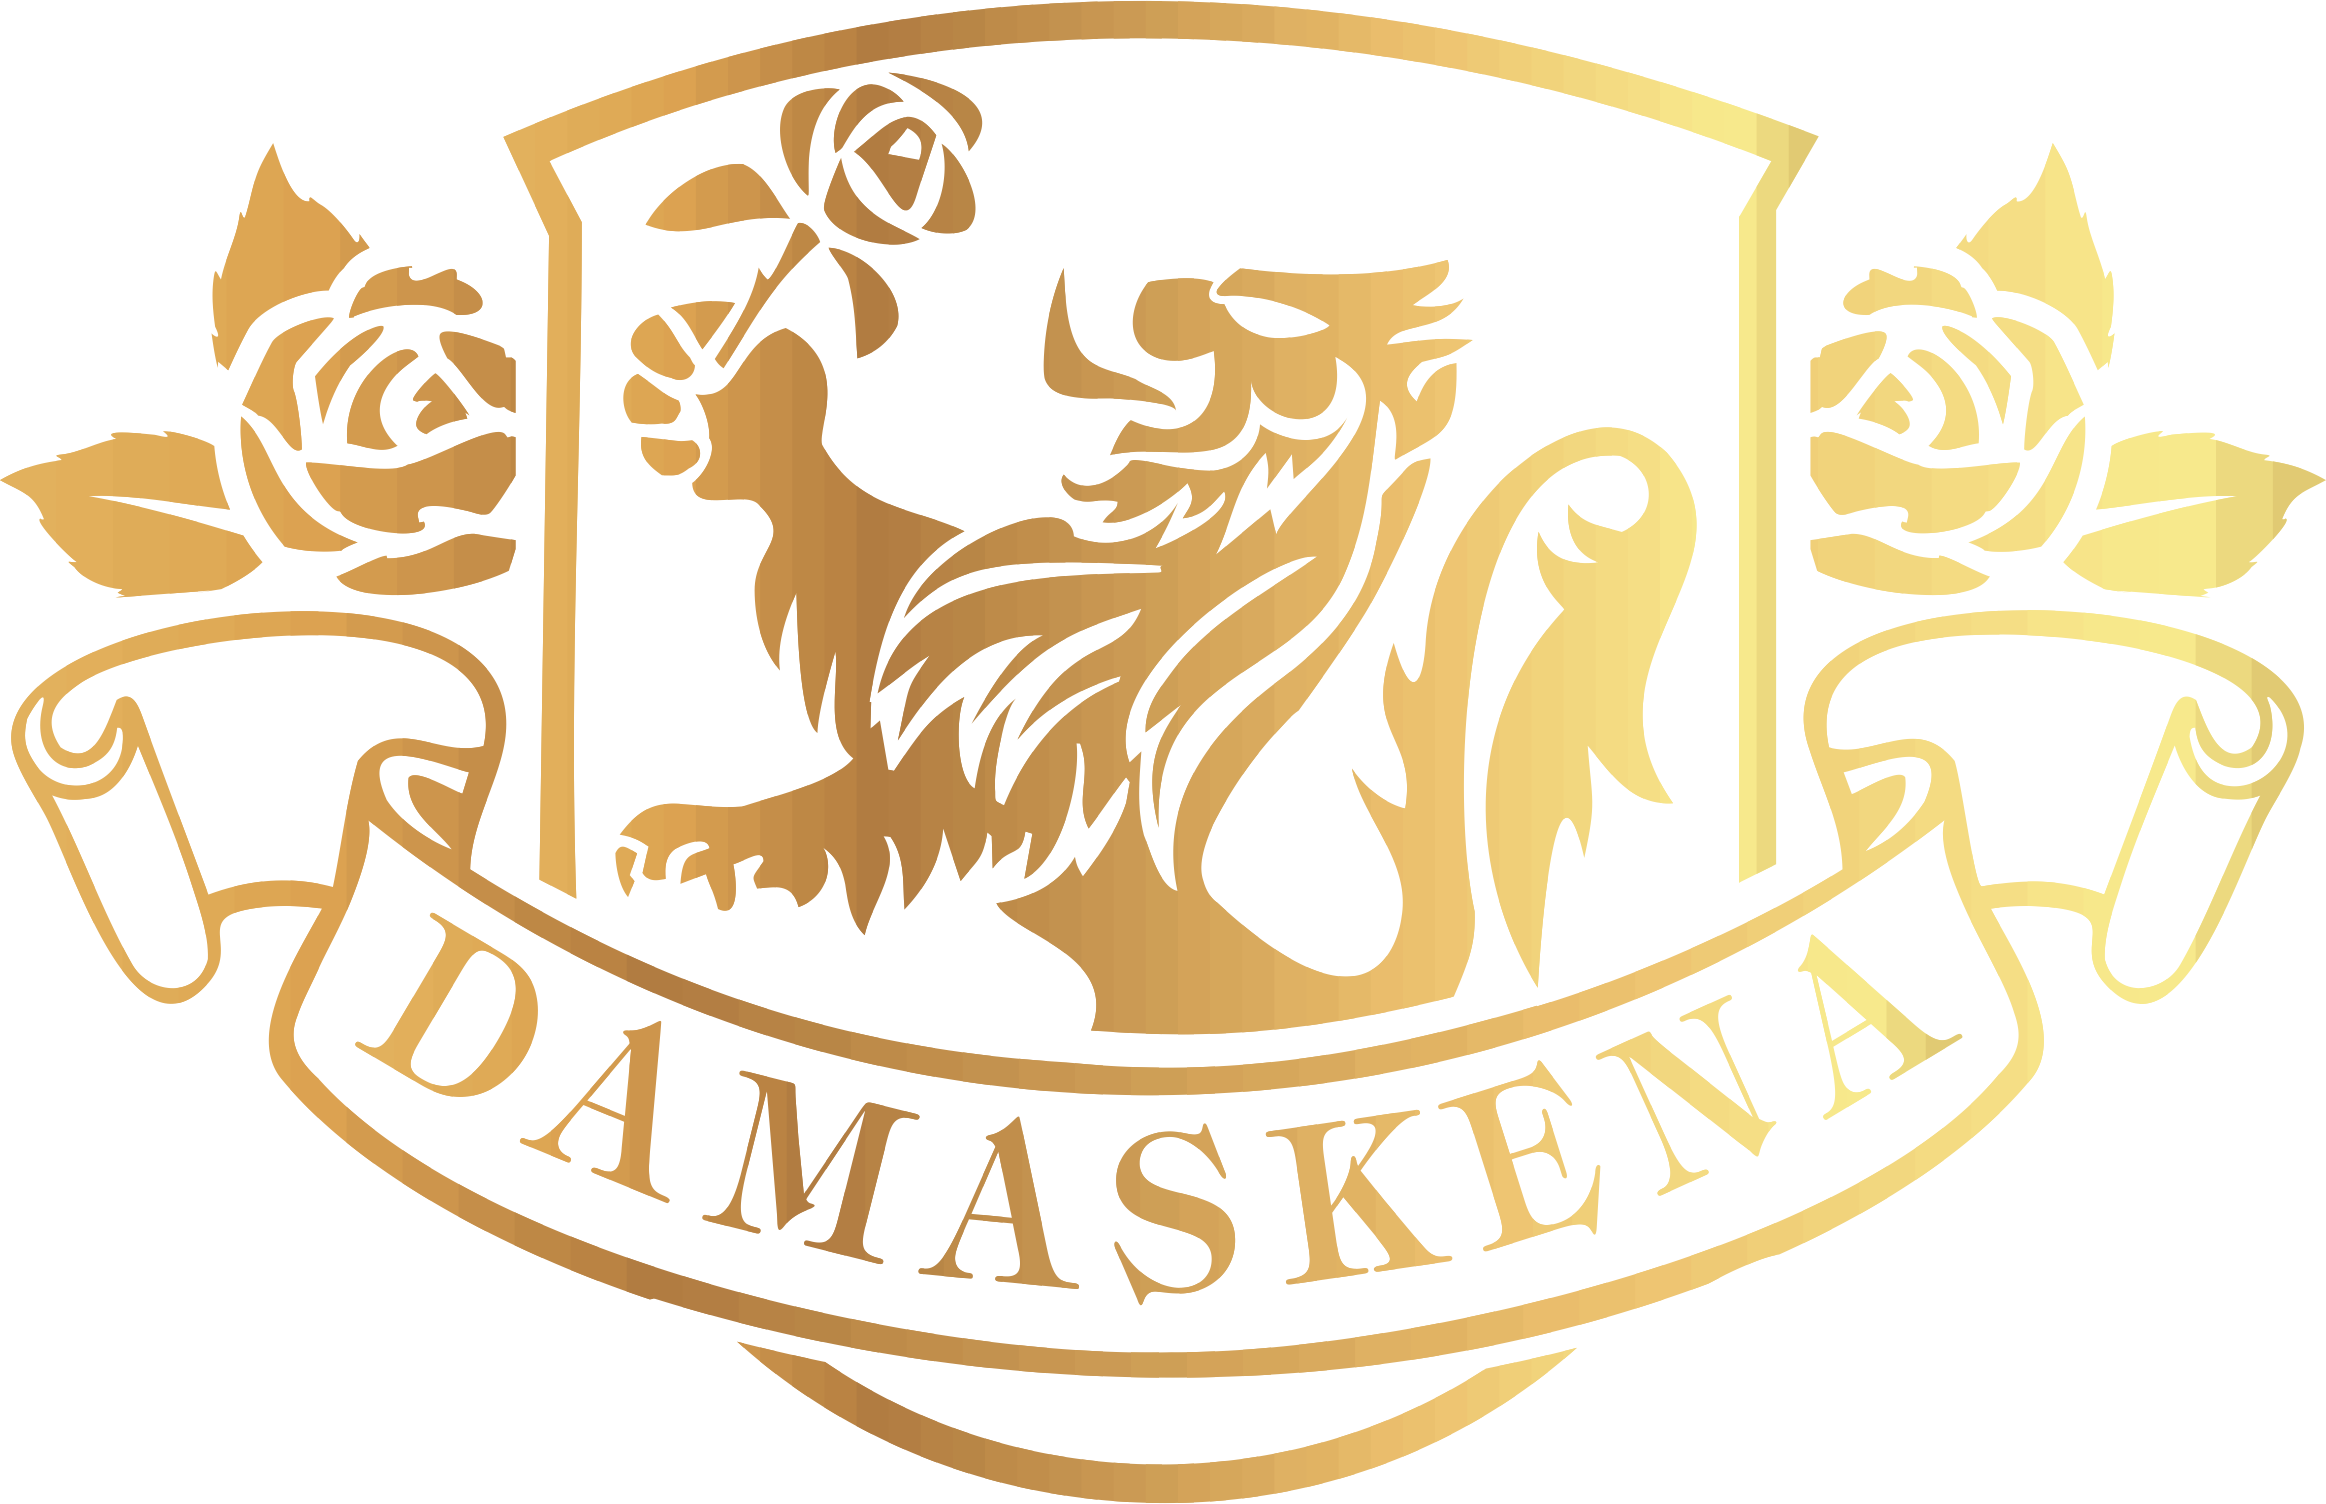 Damaskena